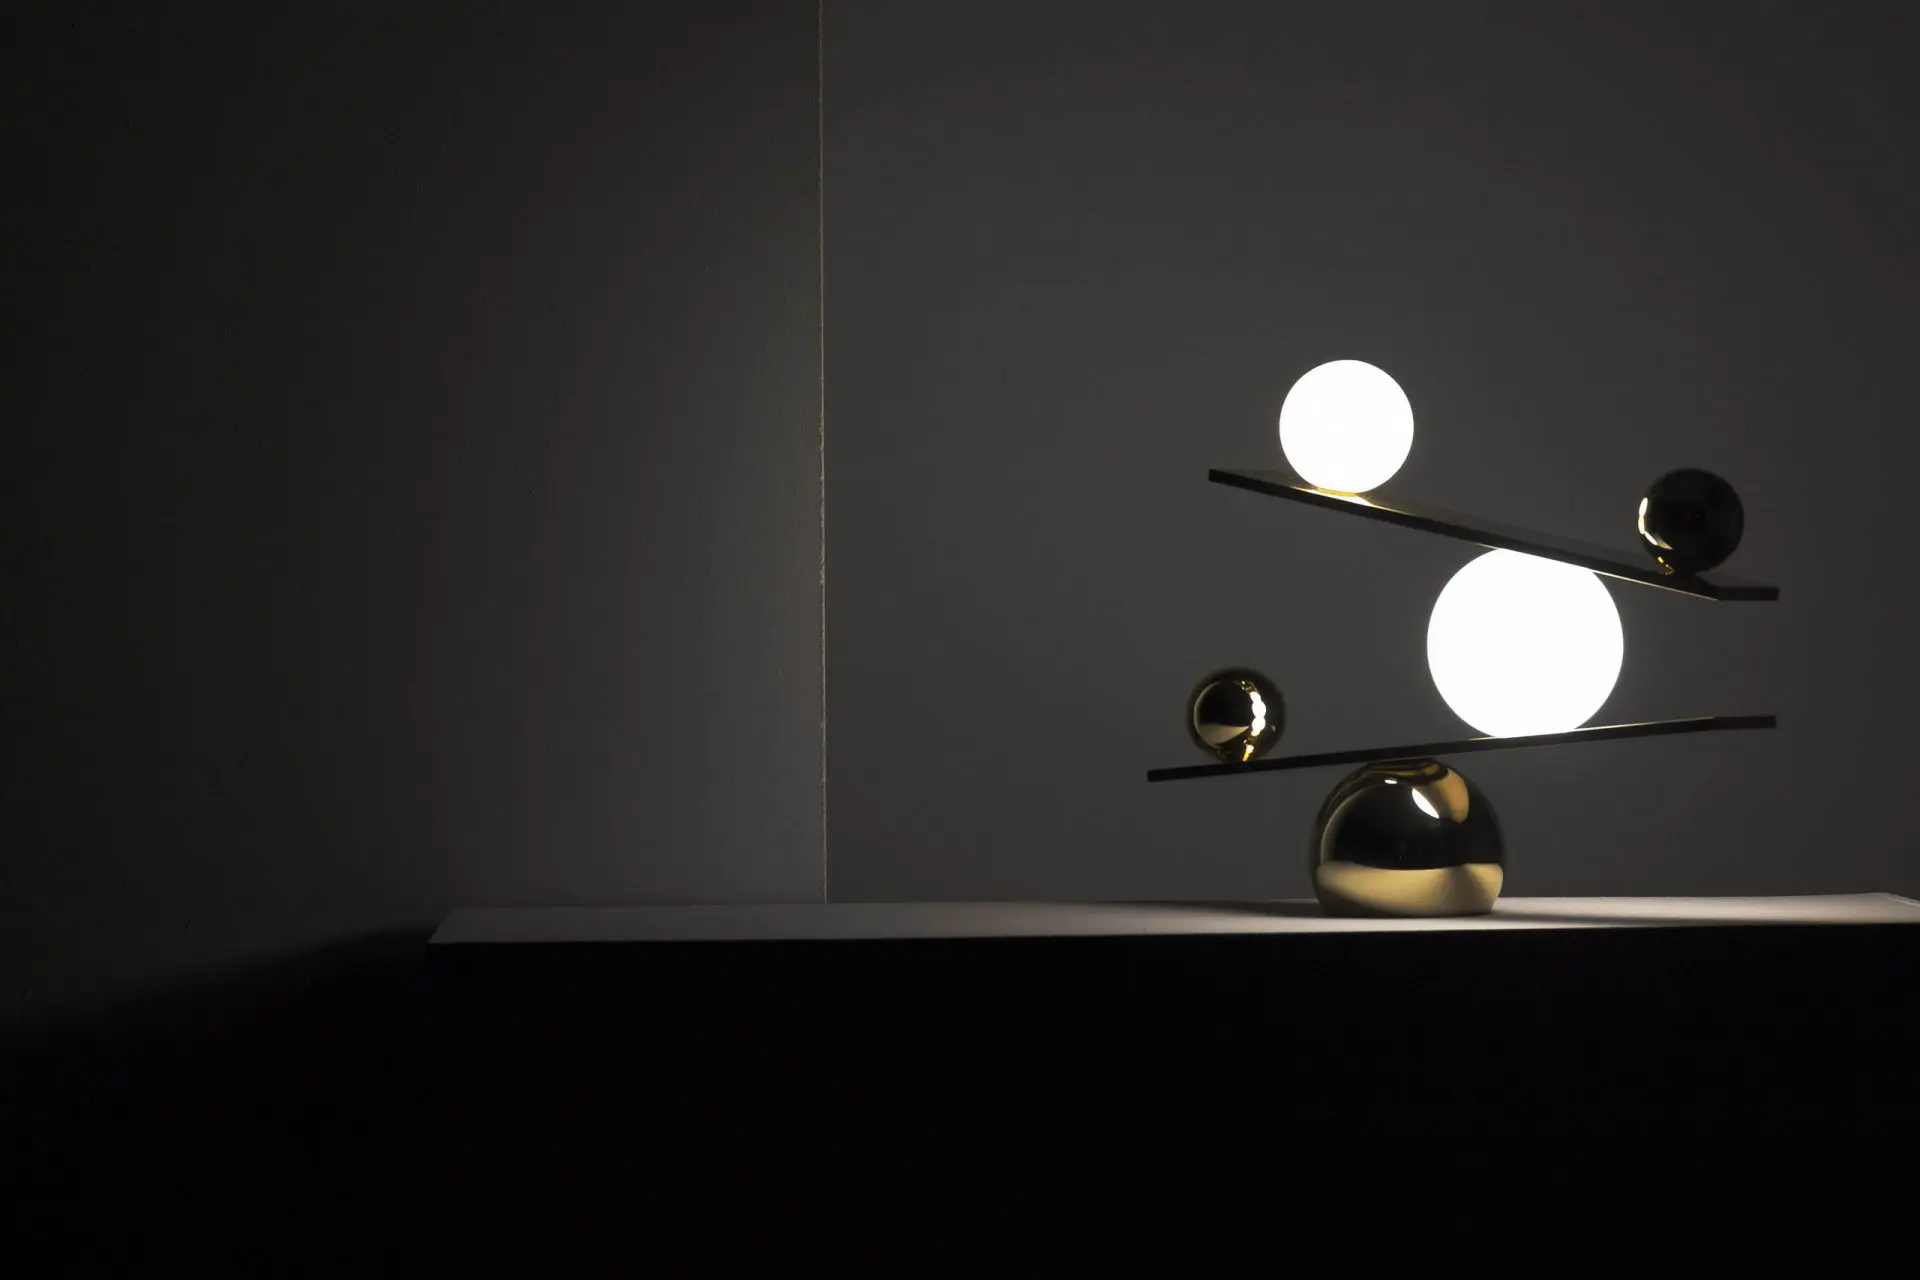 balance lamp by victor castanera